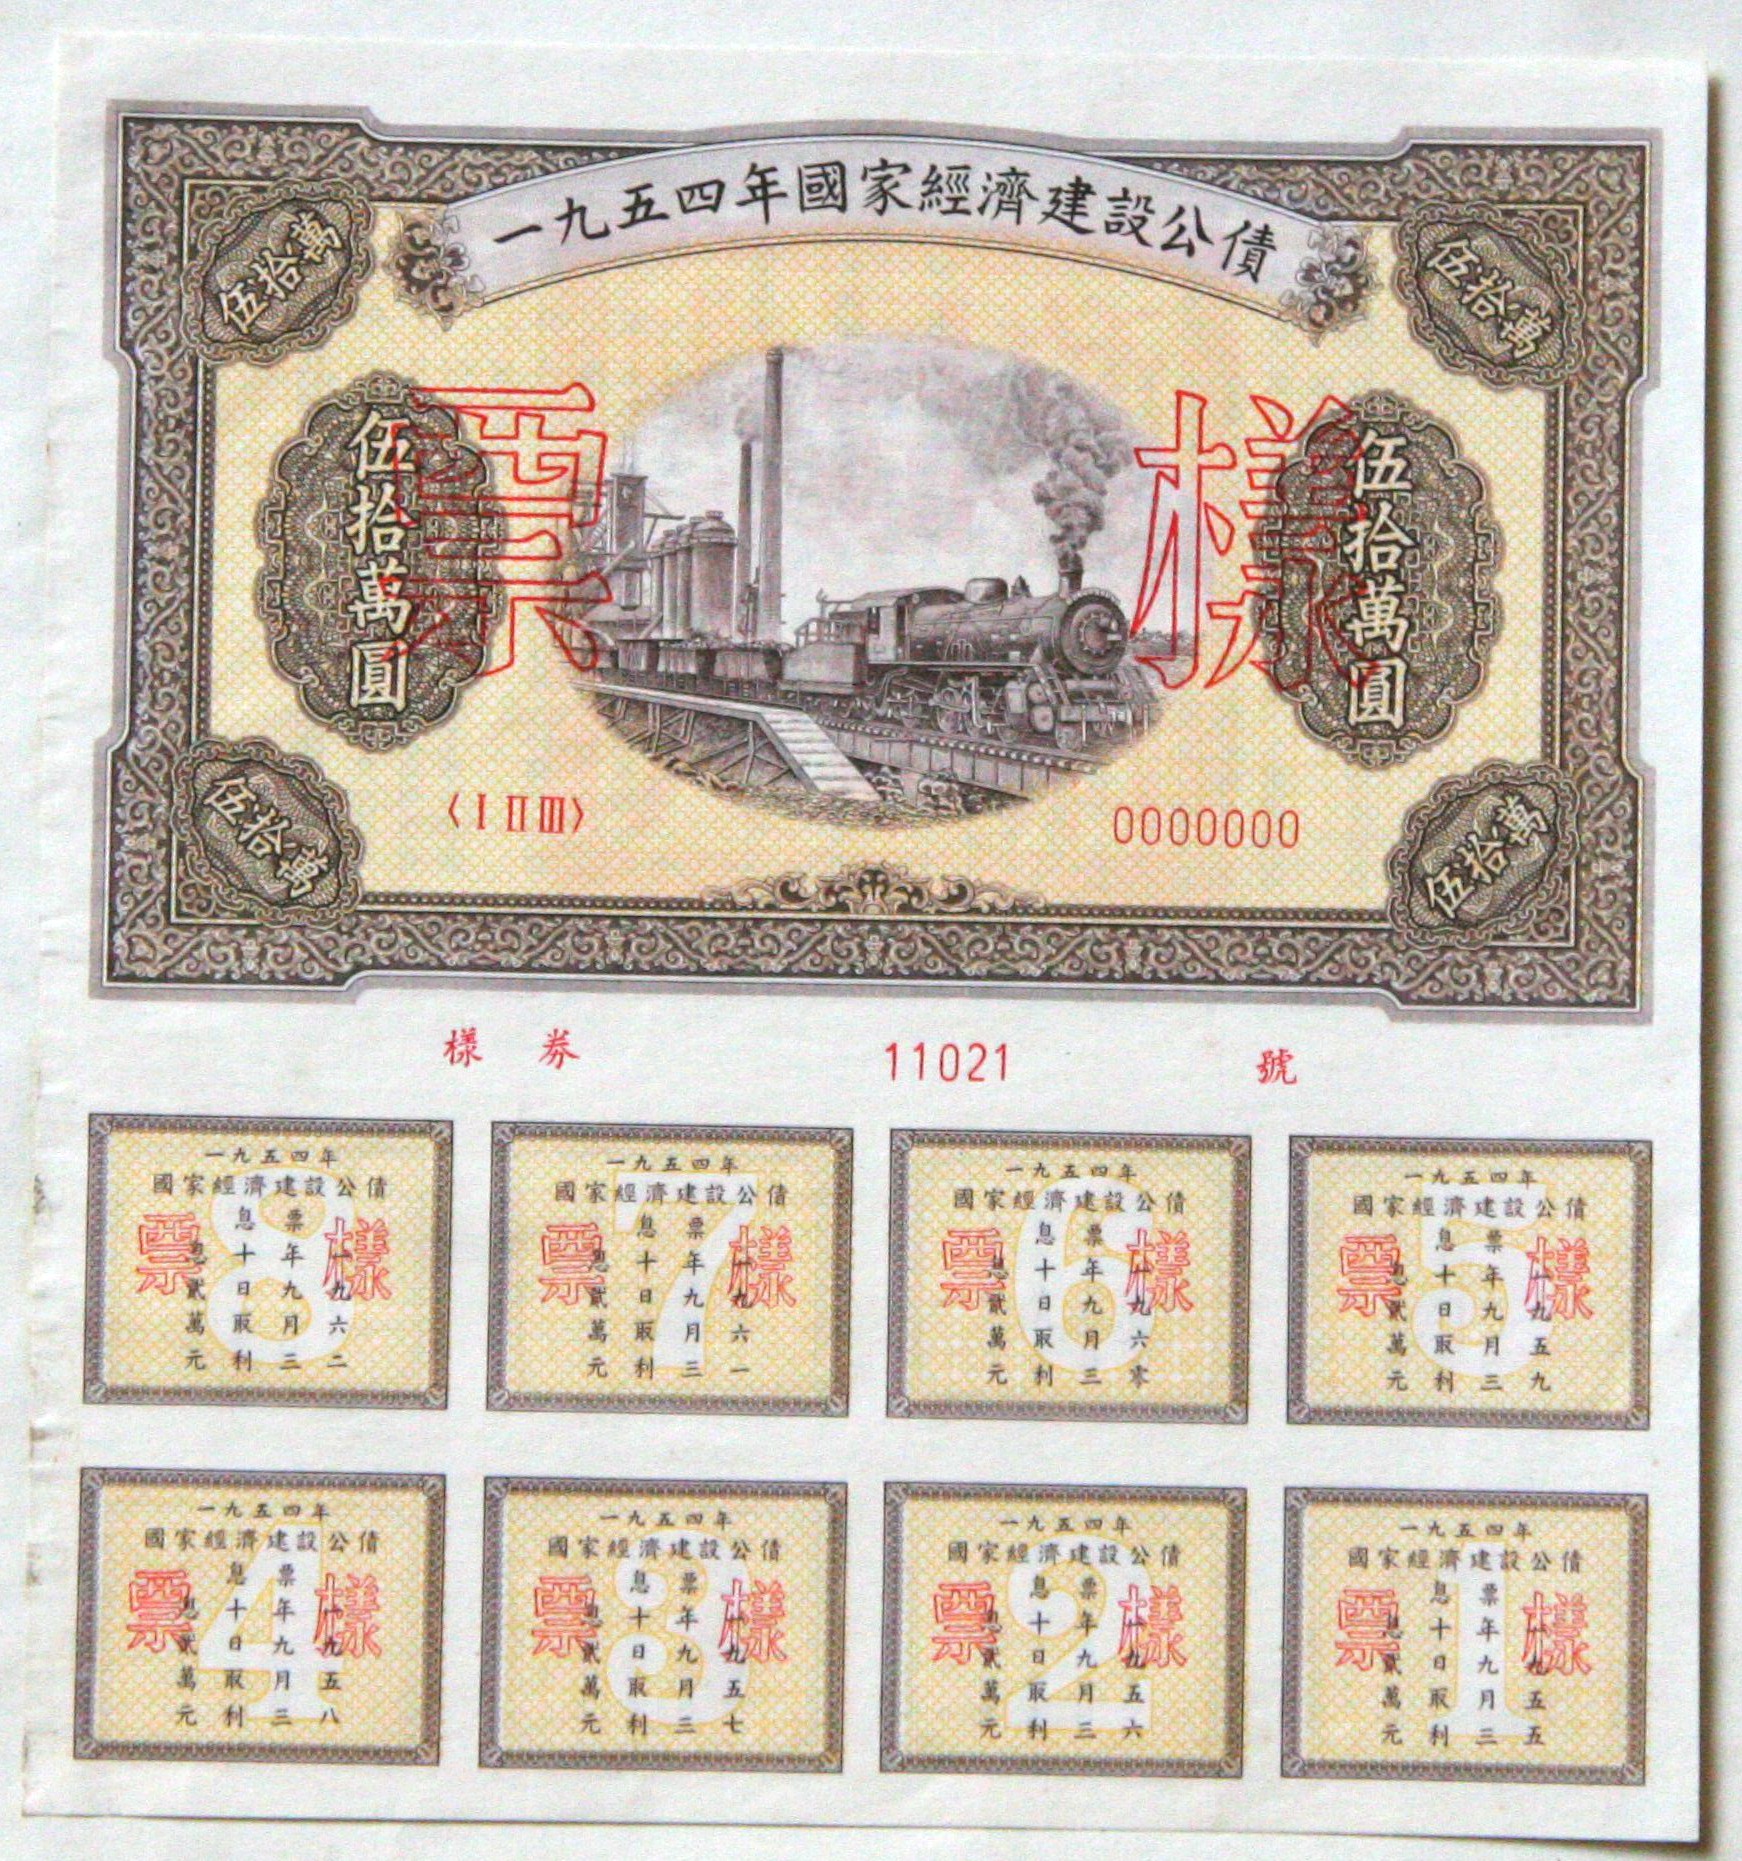 B6031, China Construction Bonds 1954 Full 5 Pcs Specimen Booklet, 500,000 Dollars